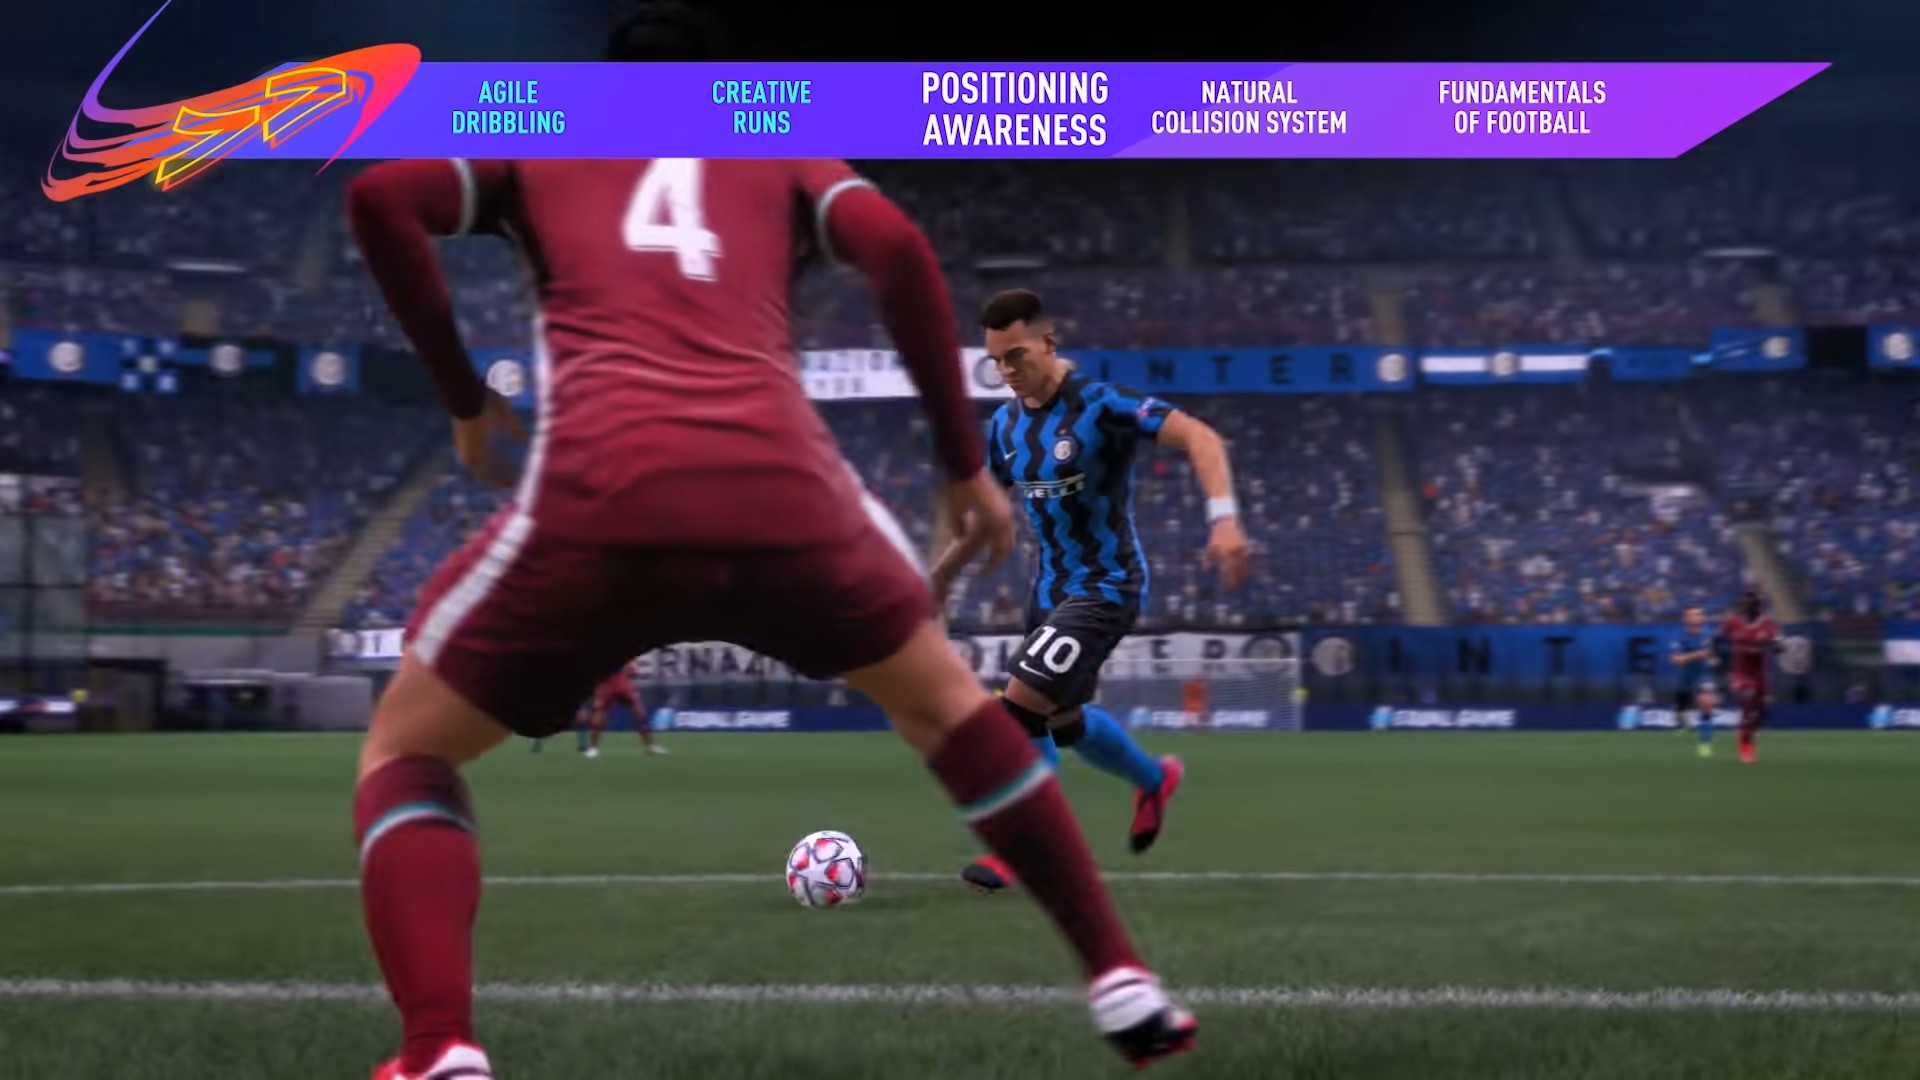 MATCH! FIFA 21 Ultimate Guide (Digital) 